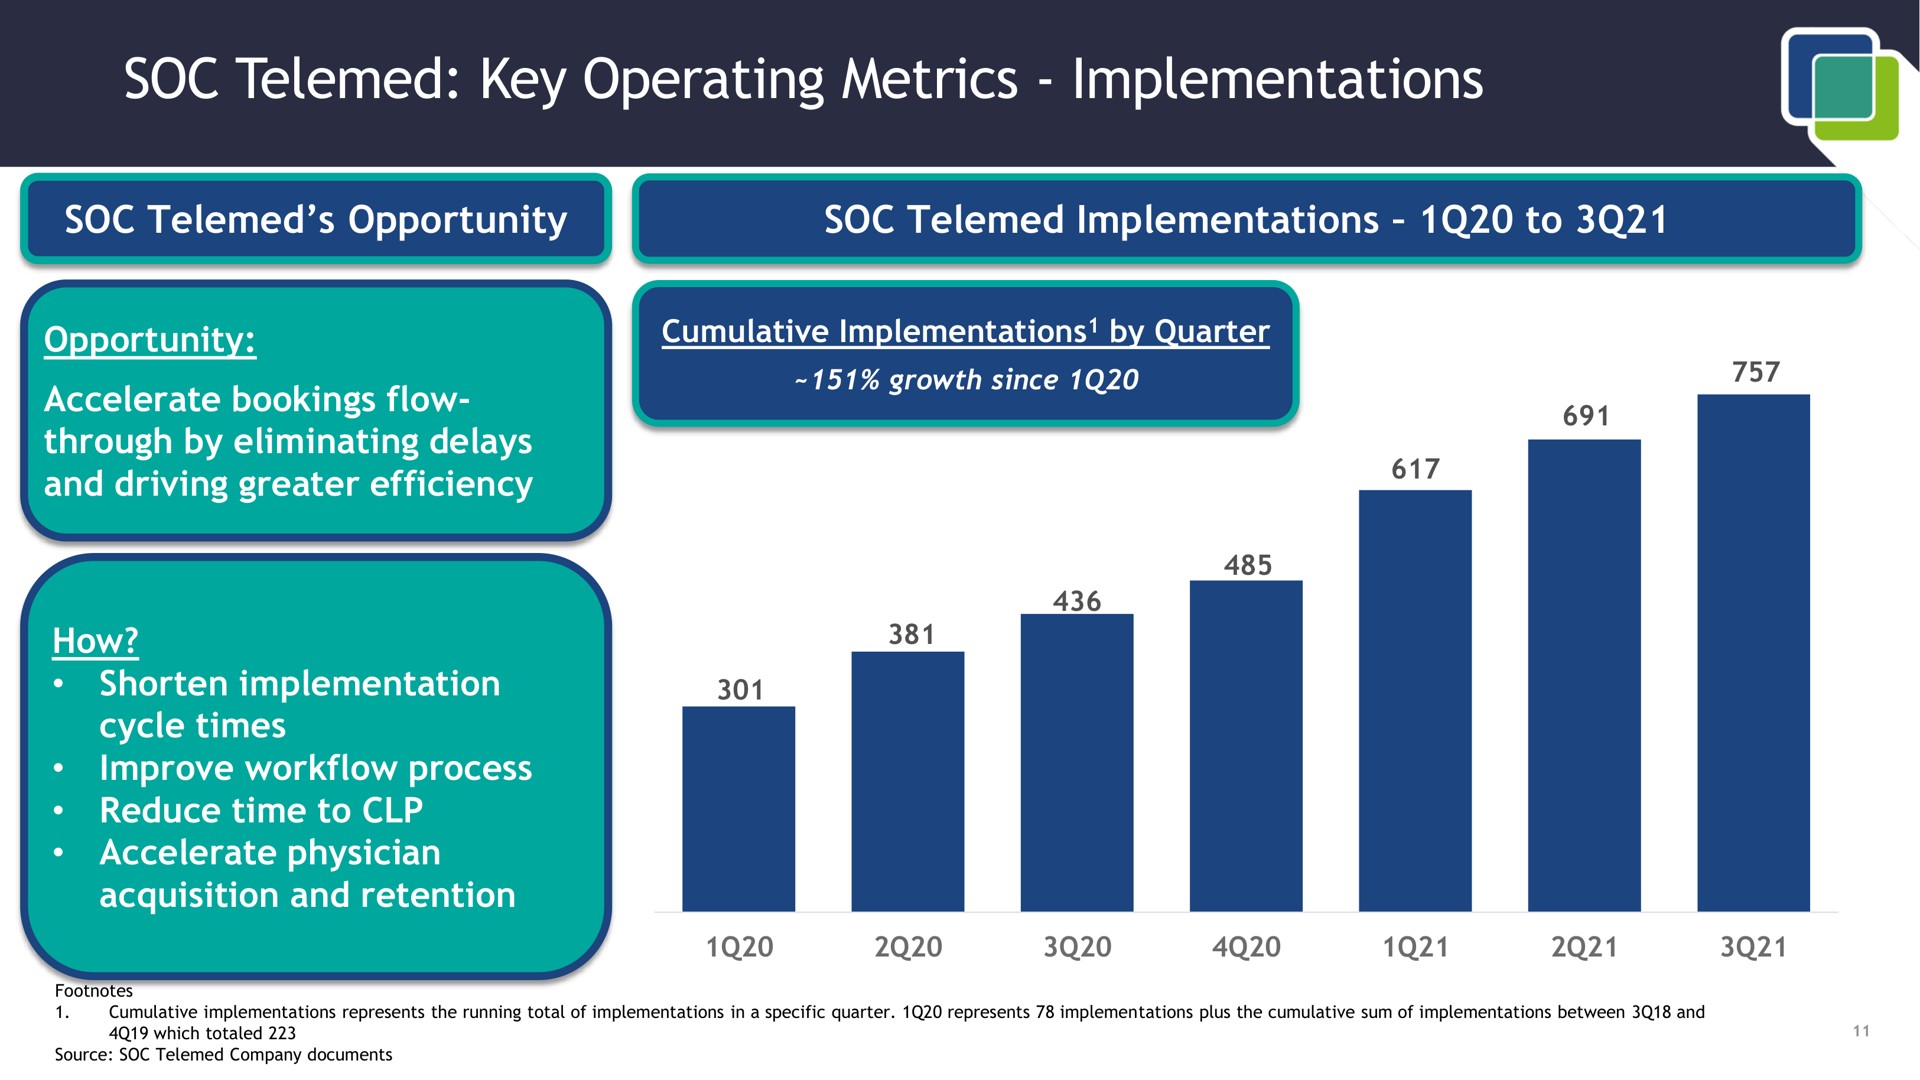 soc key operating metrics implementations i | SOC Telemed